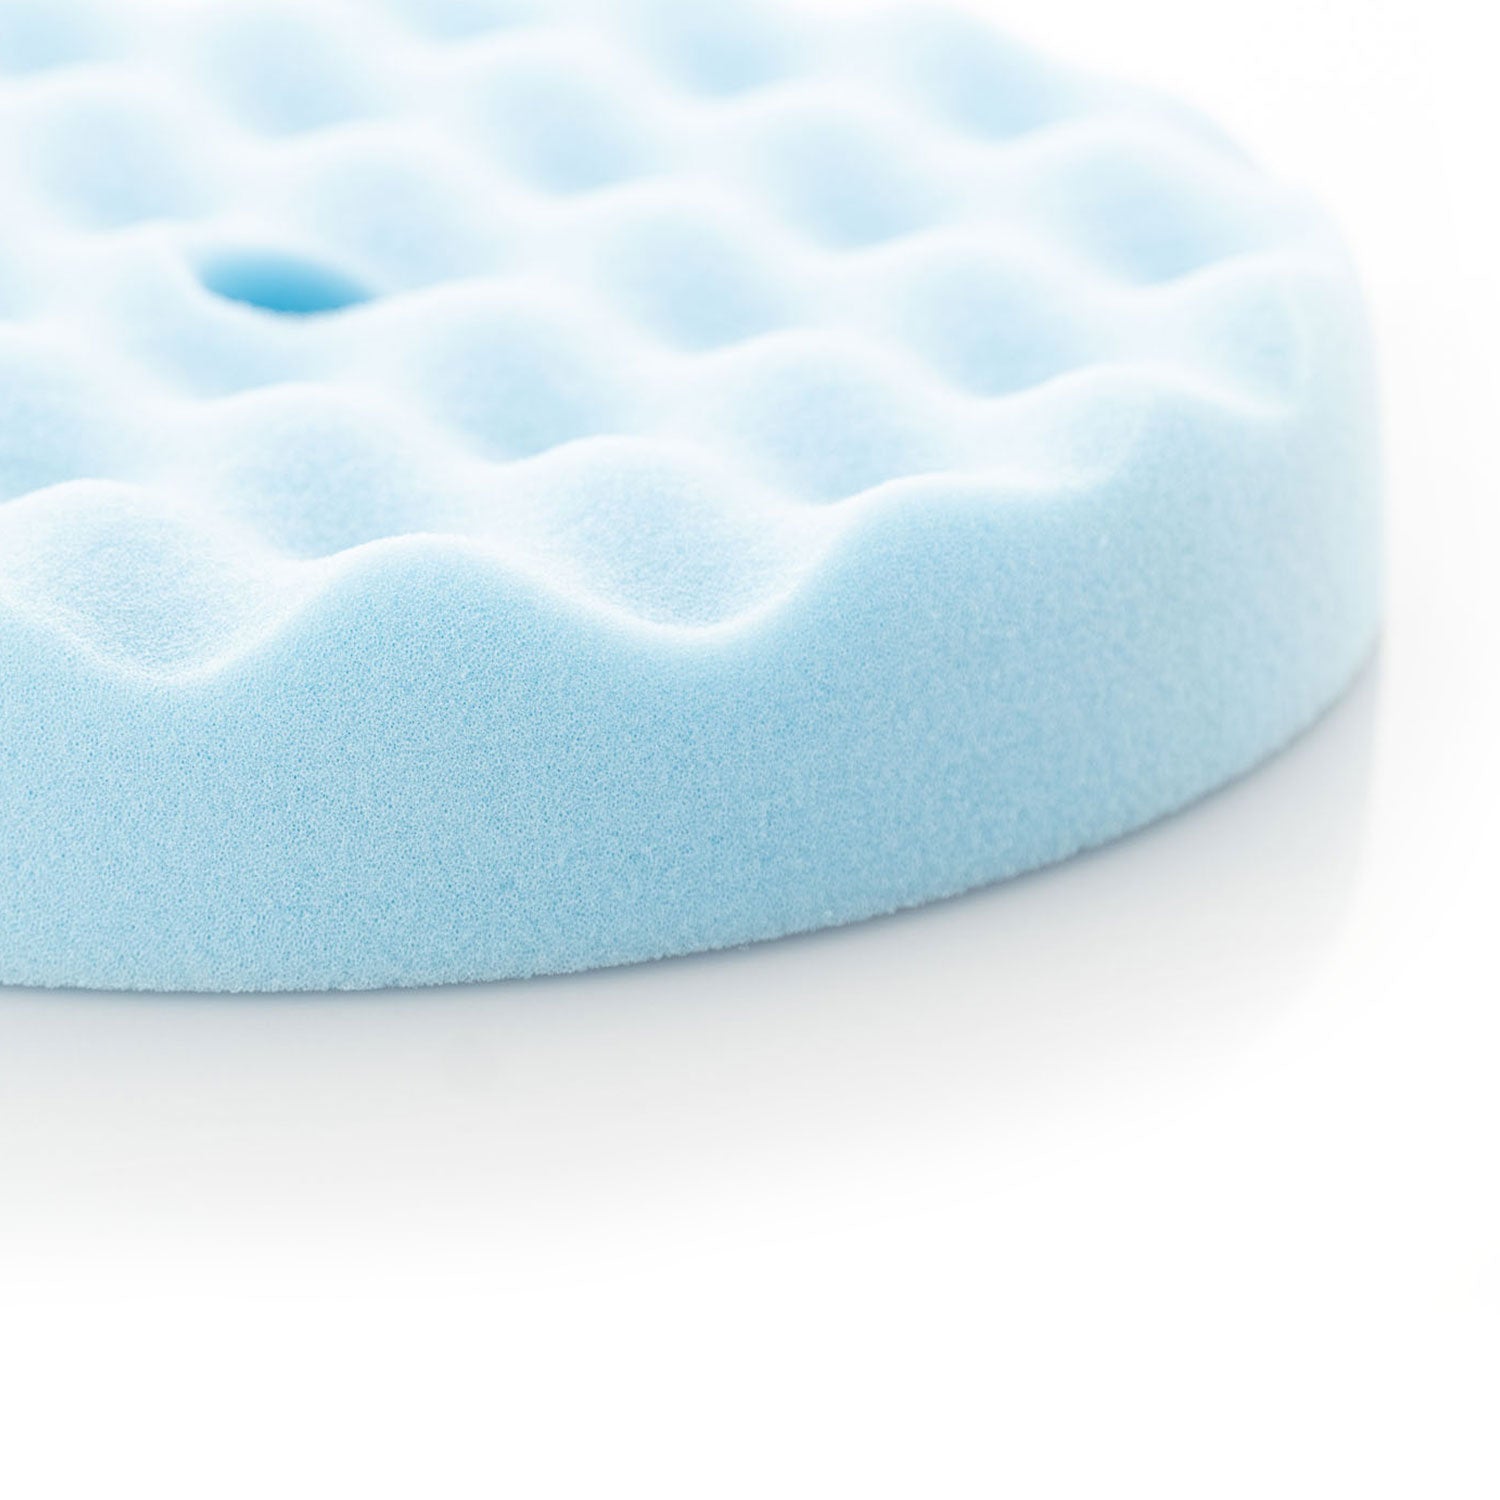 p02-waffle-foam-8-inch-polishing-pad-close-up